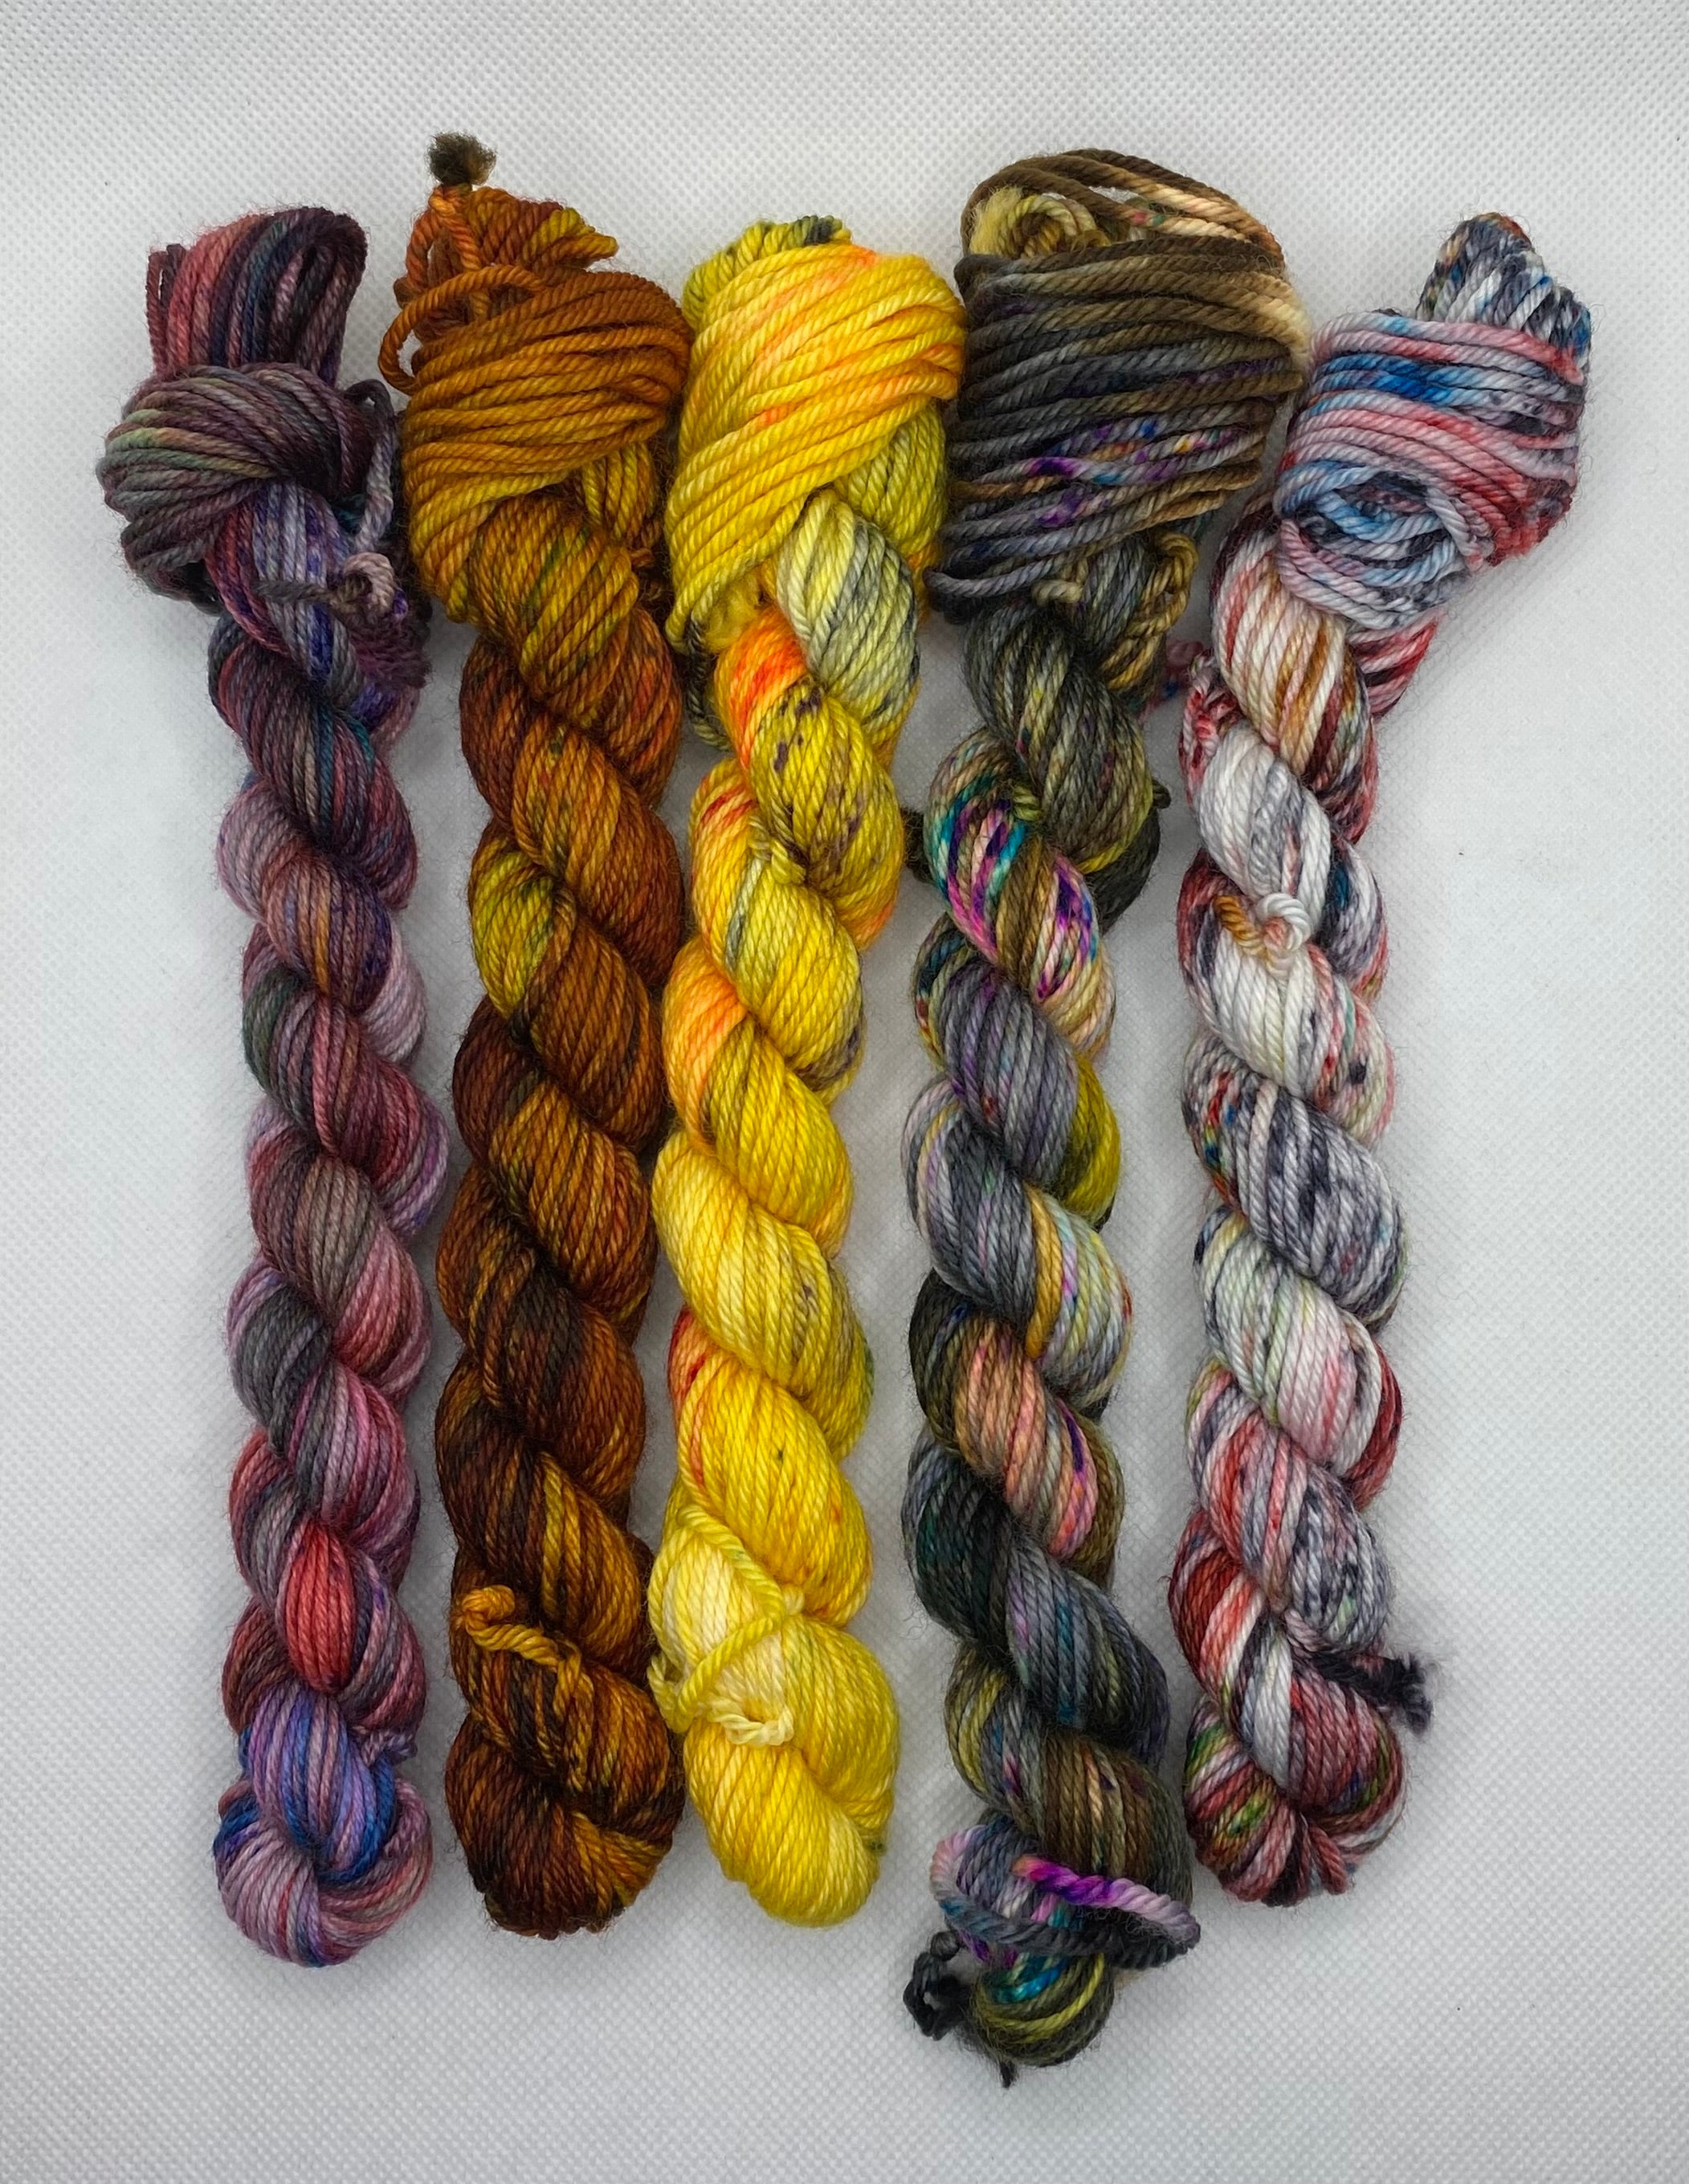 5 Skein Matching Set: “Moody” Hand Dyed Yarn